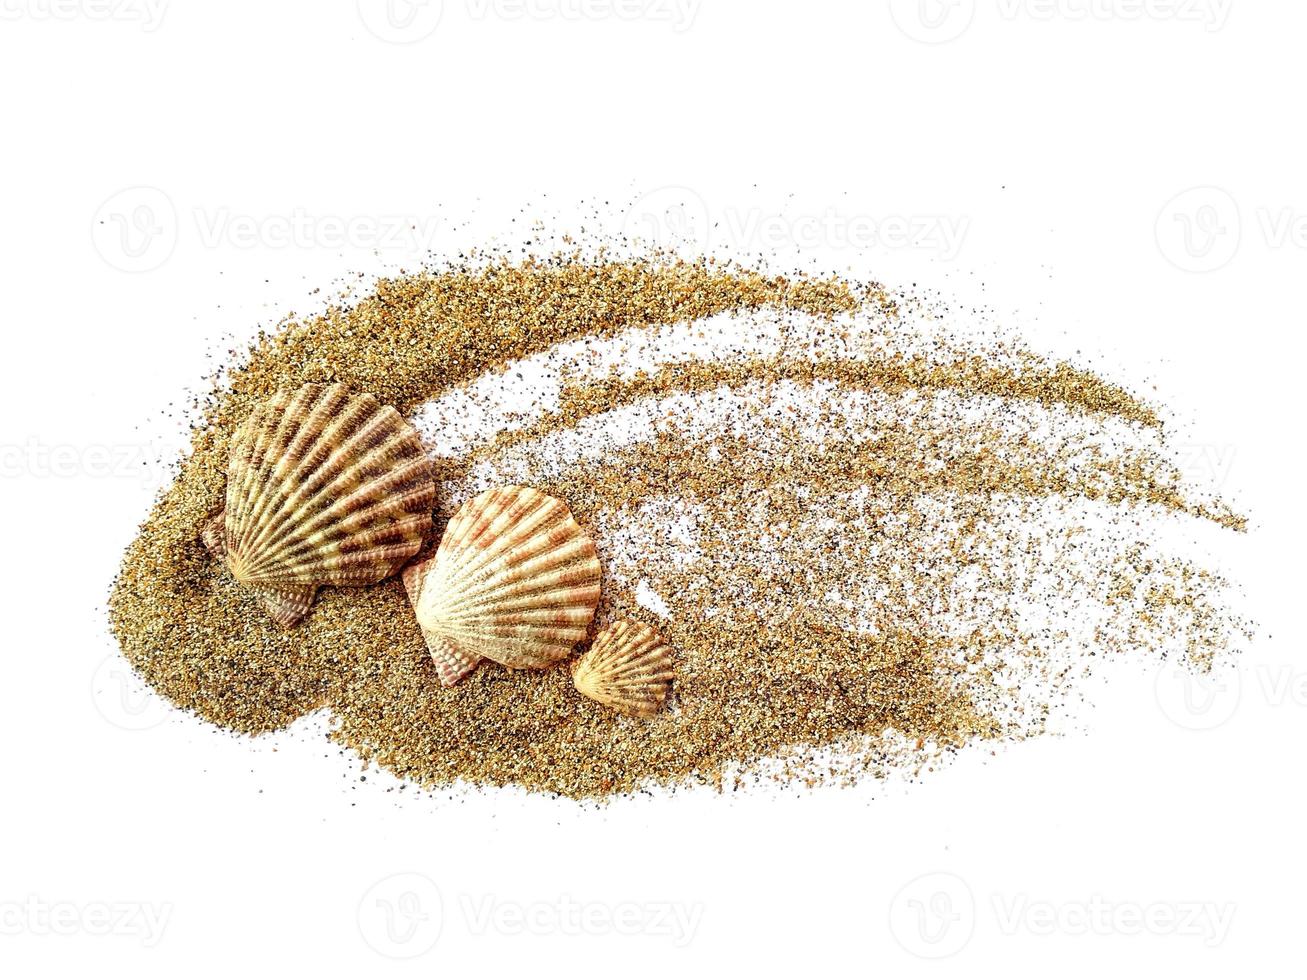 conchas do mar e praia de areia foto